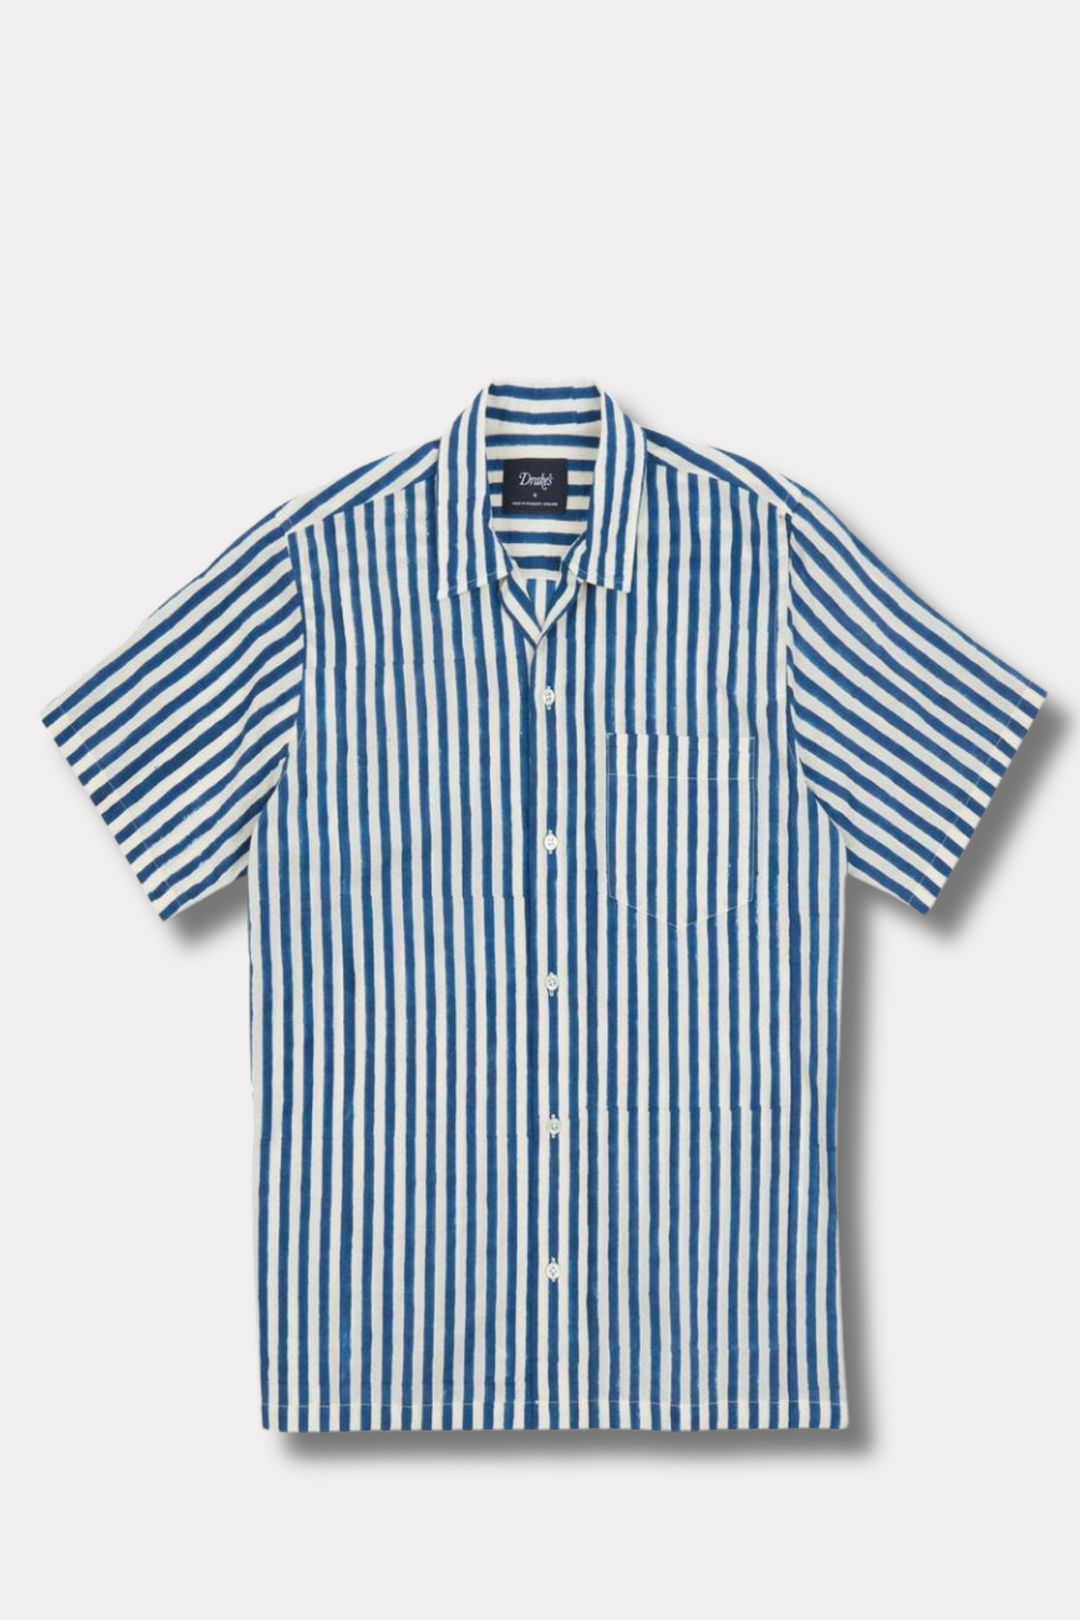 Short Sleeve Cotton Block Print Camp Collar Blue Stripe